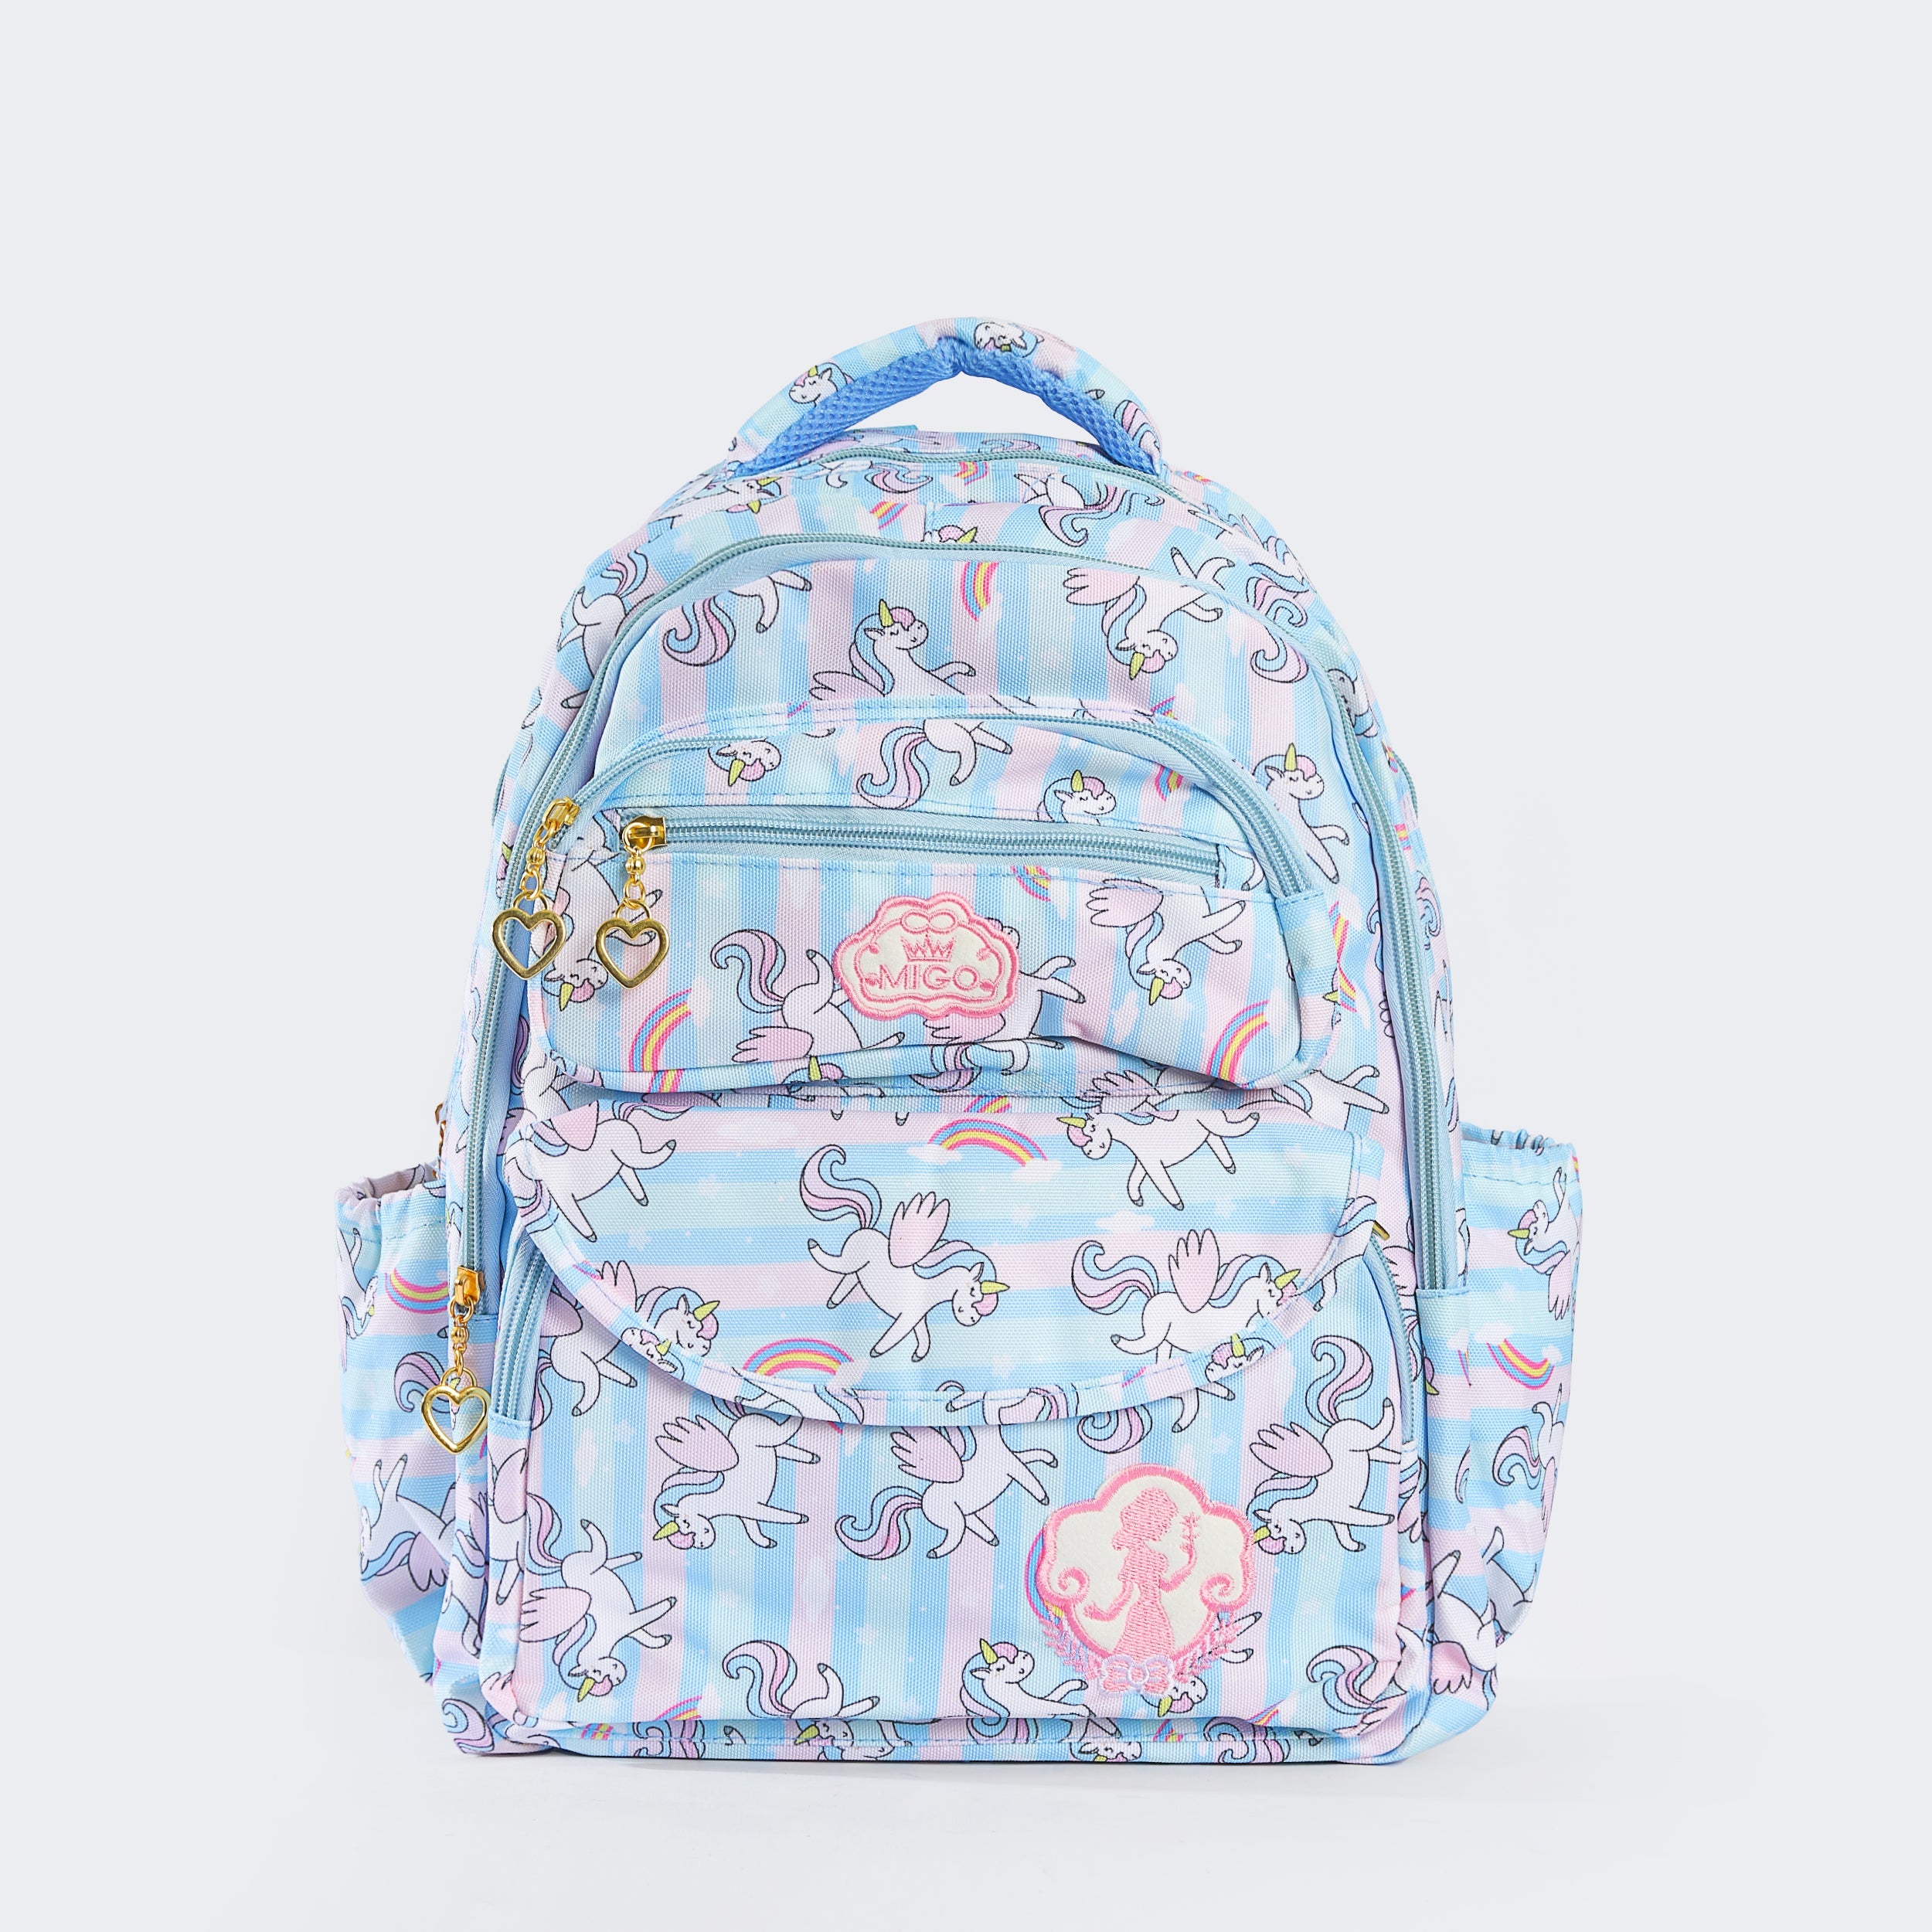 Baby Blue Fantasy School Bag For Kids 18 INCH